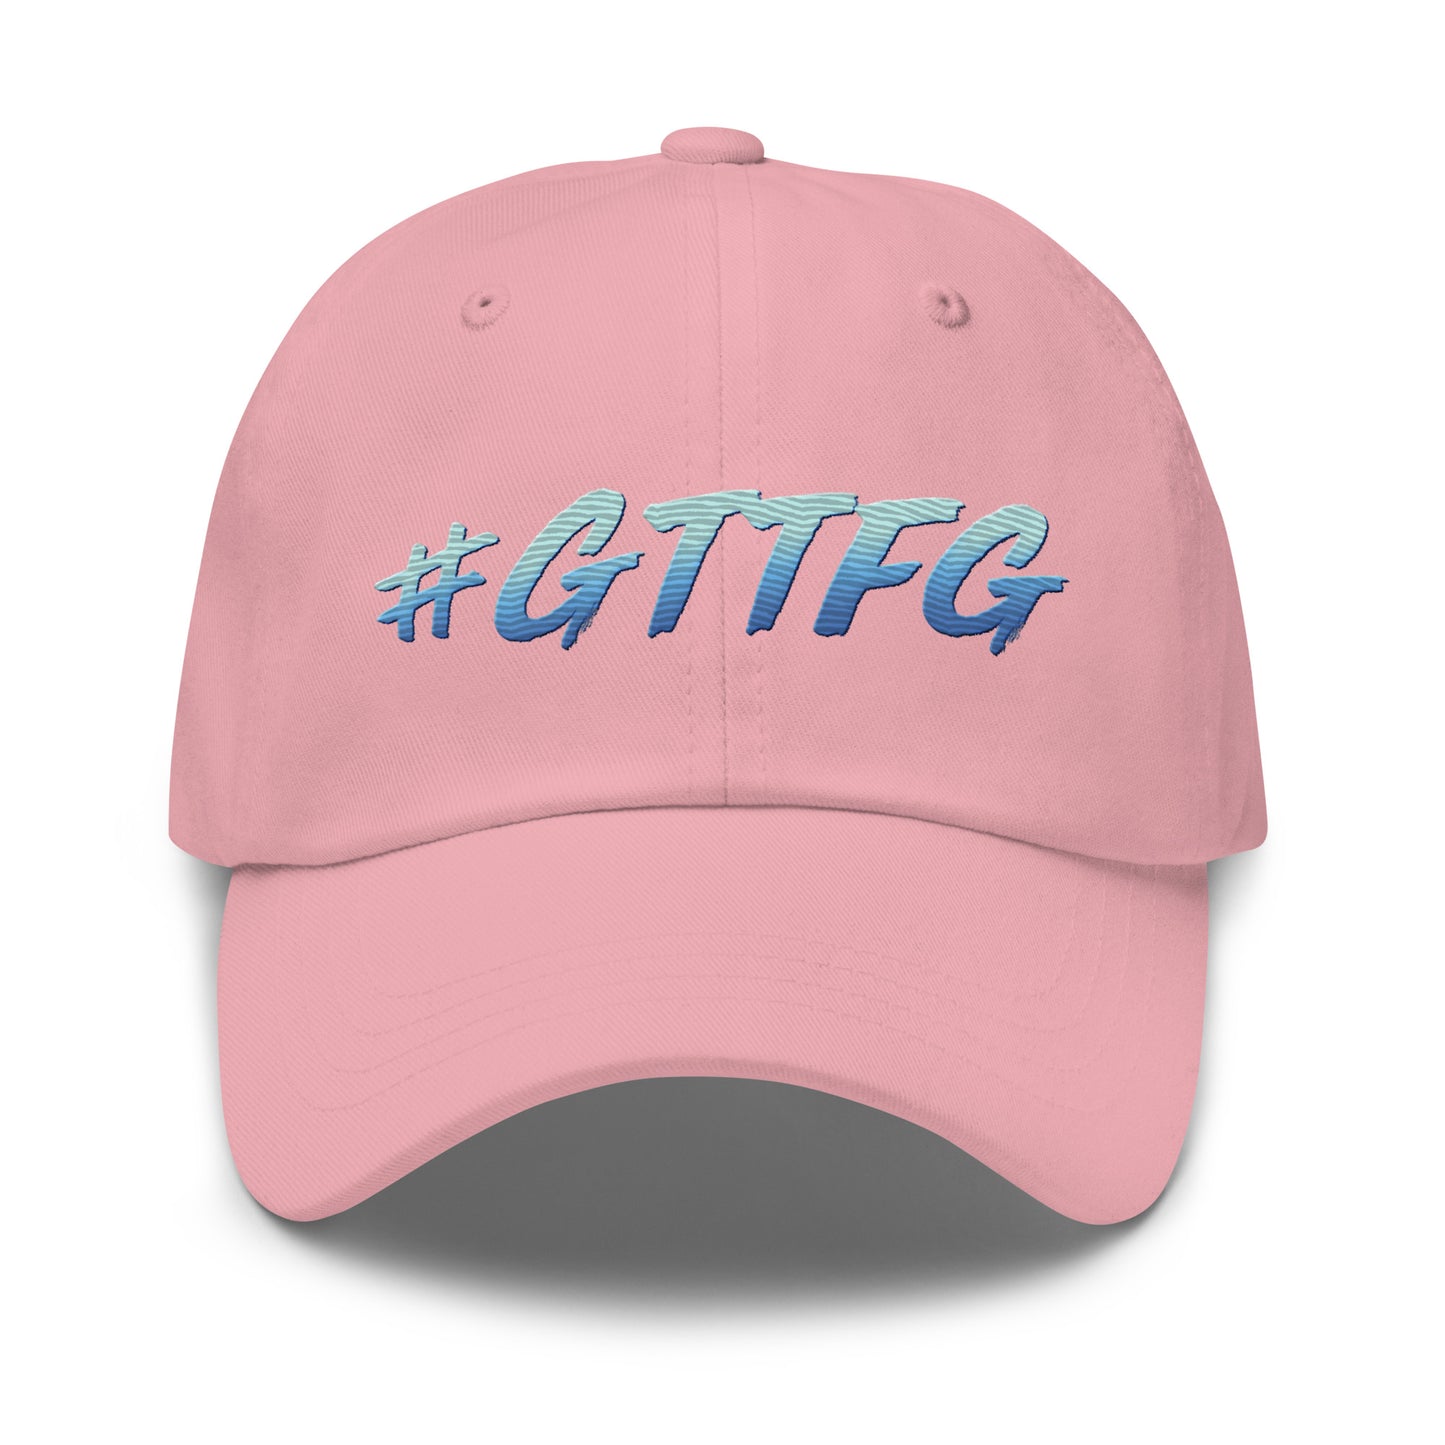 GTTFG Blue Dad Hat